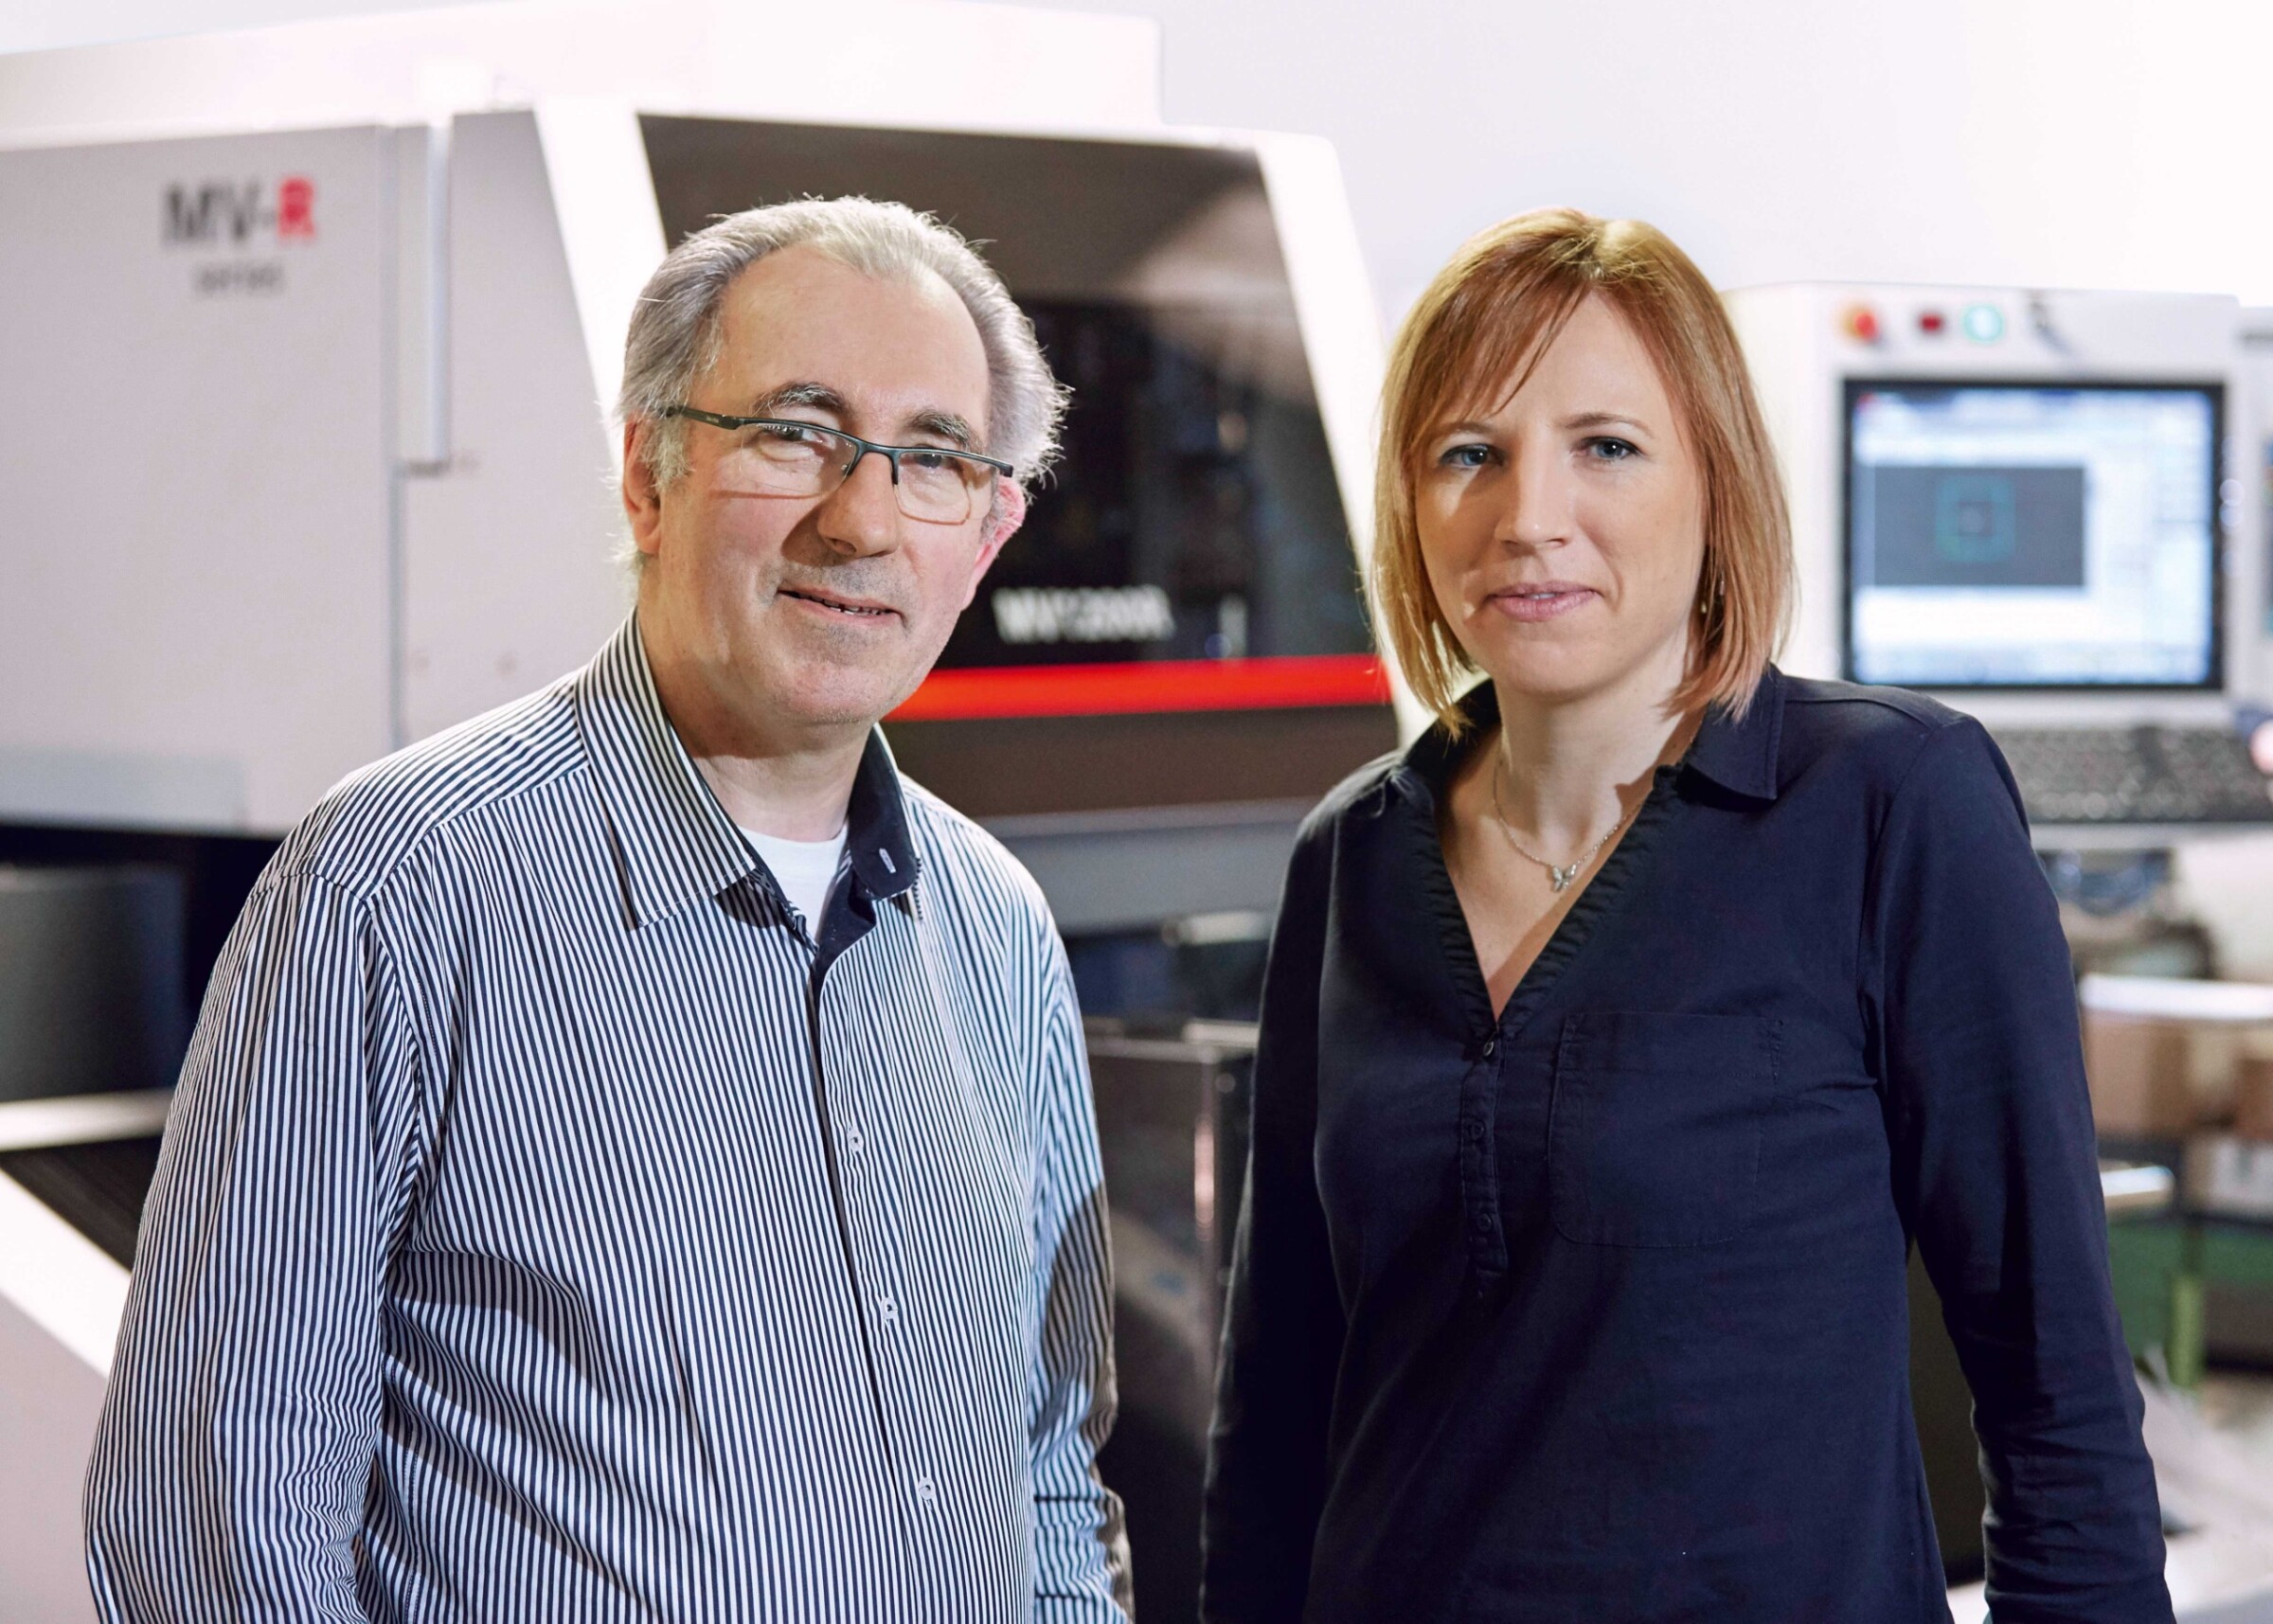 Alexandre Vigneux and his daughter Bérengère are enthusiastic about progressive technology.